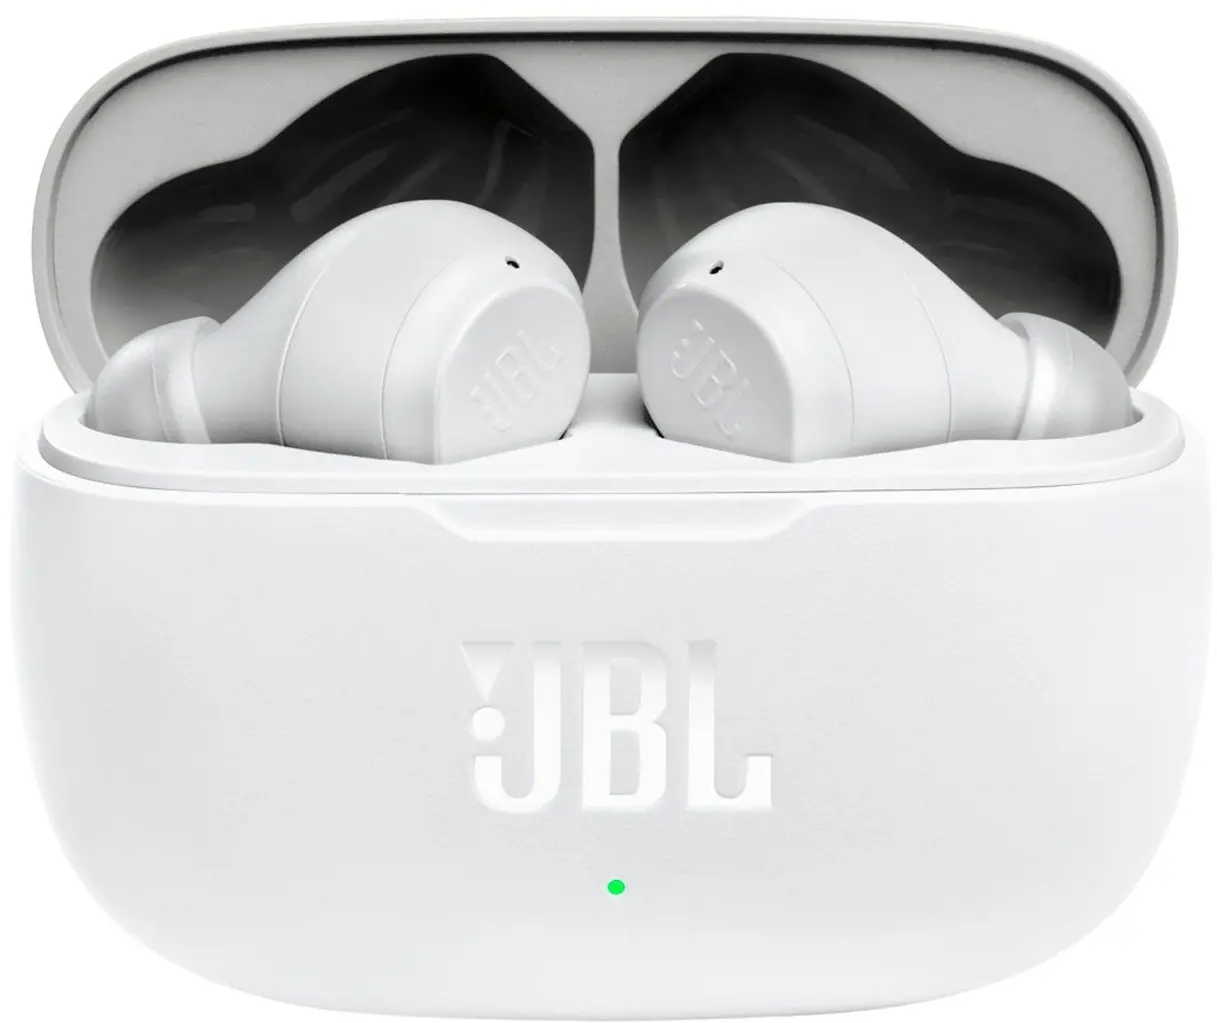 Slušalice+mikrofon JBL Vibe Buds Bluetooth white